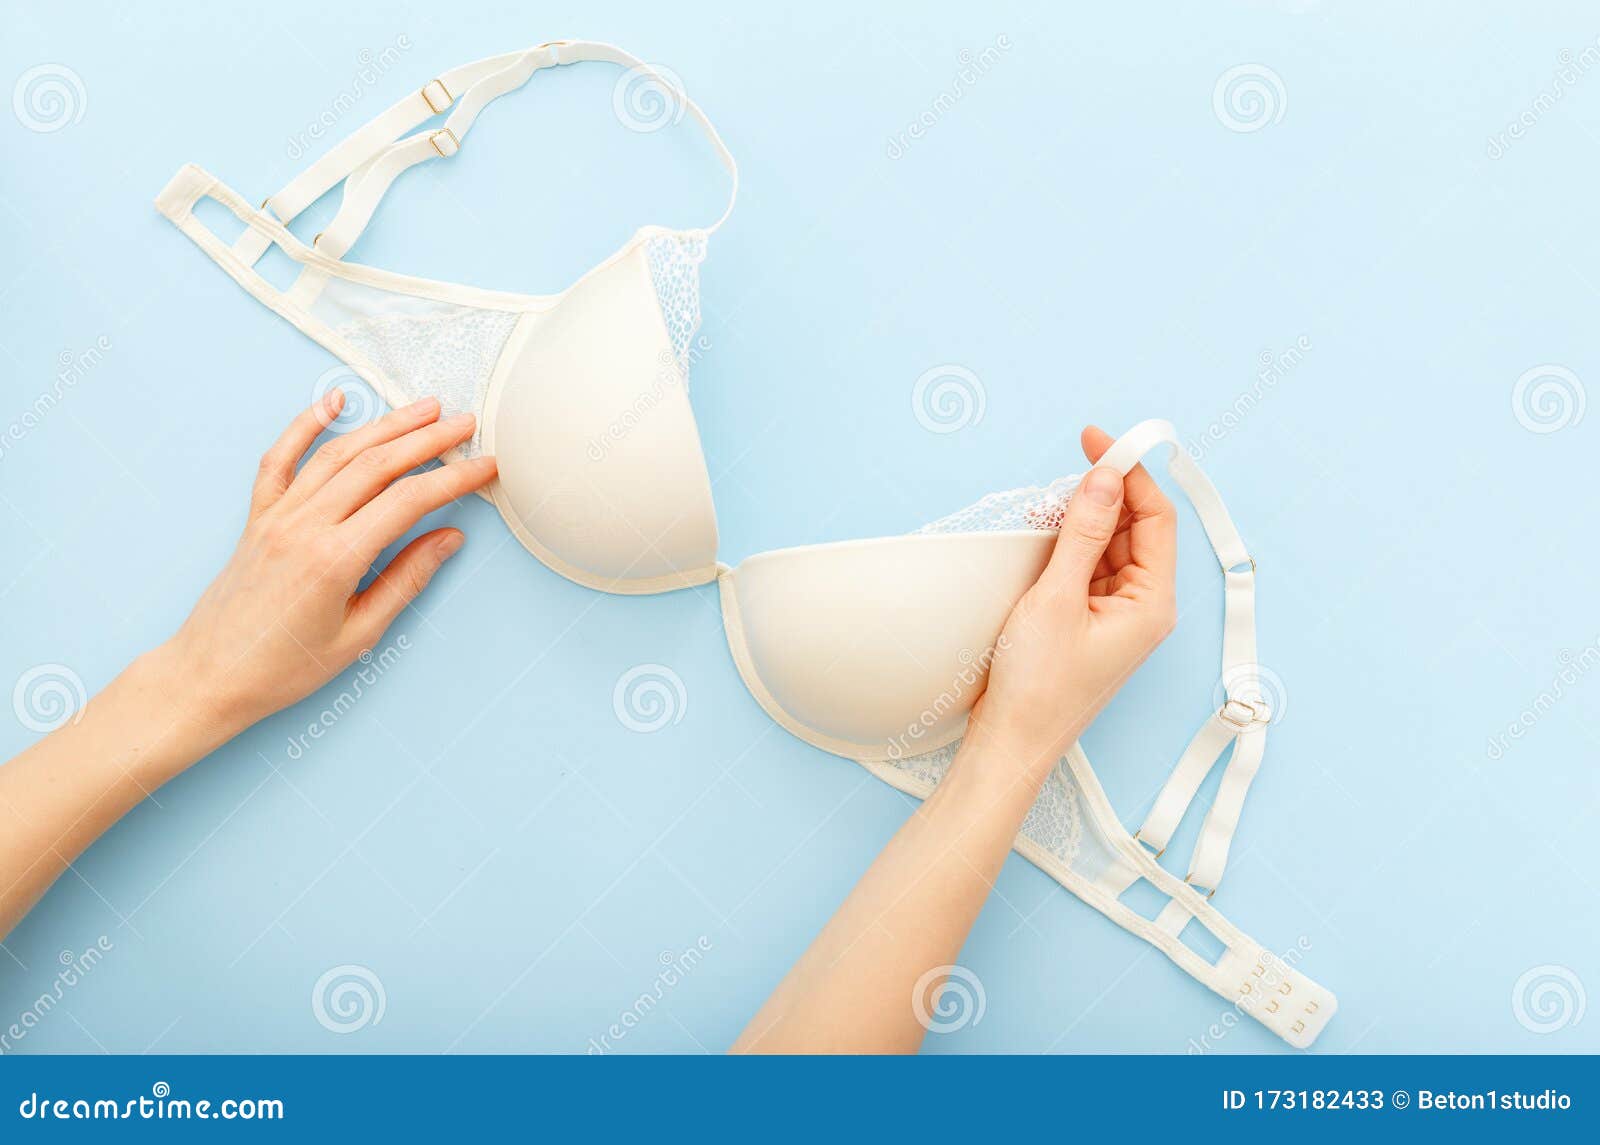 Foto de Woman is choosing a new bra in the lingerie store concept